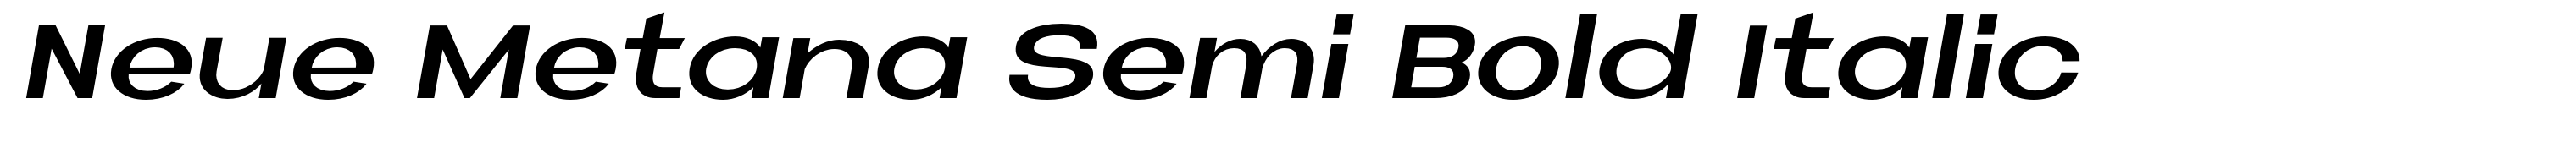 Neue Metana Semi Bold Italic